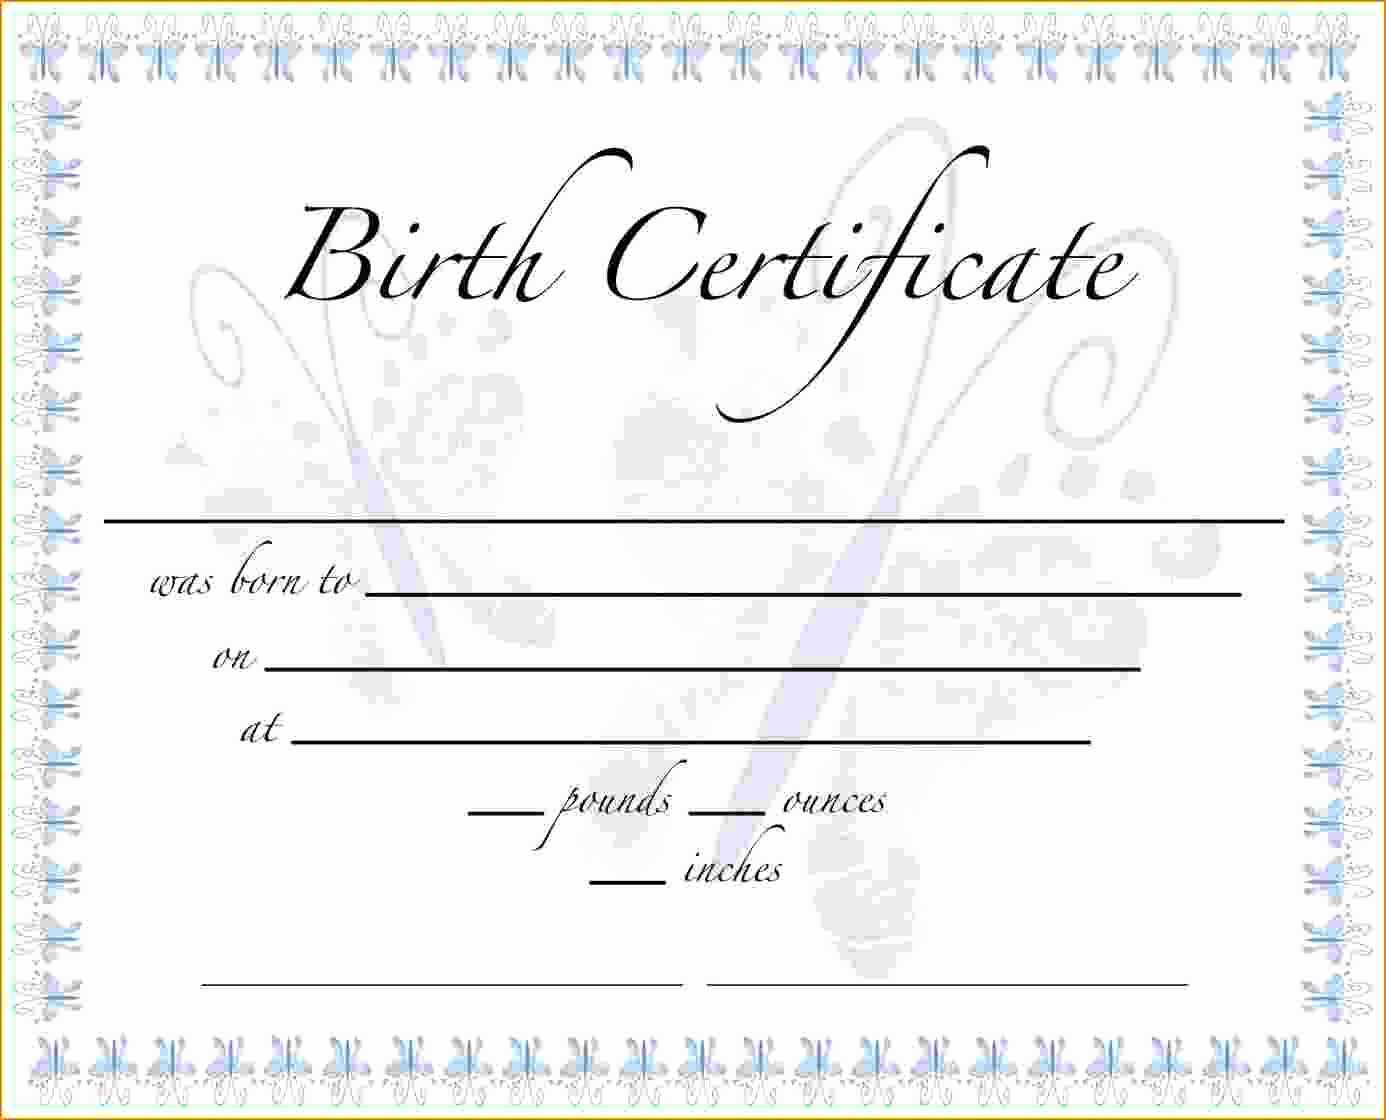 German Birth Certificate Template - Karan.ald2014 With Regard To Birth Certificate Templates For Word